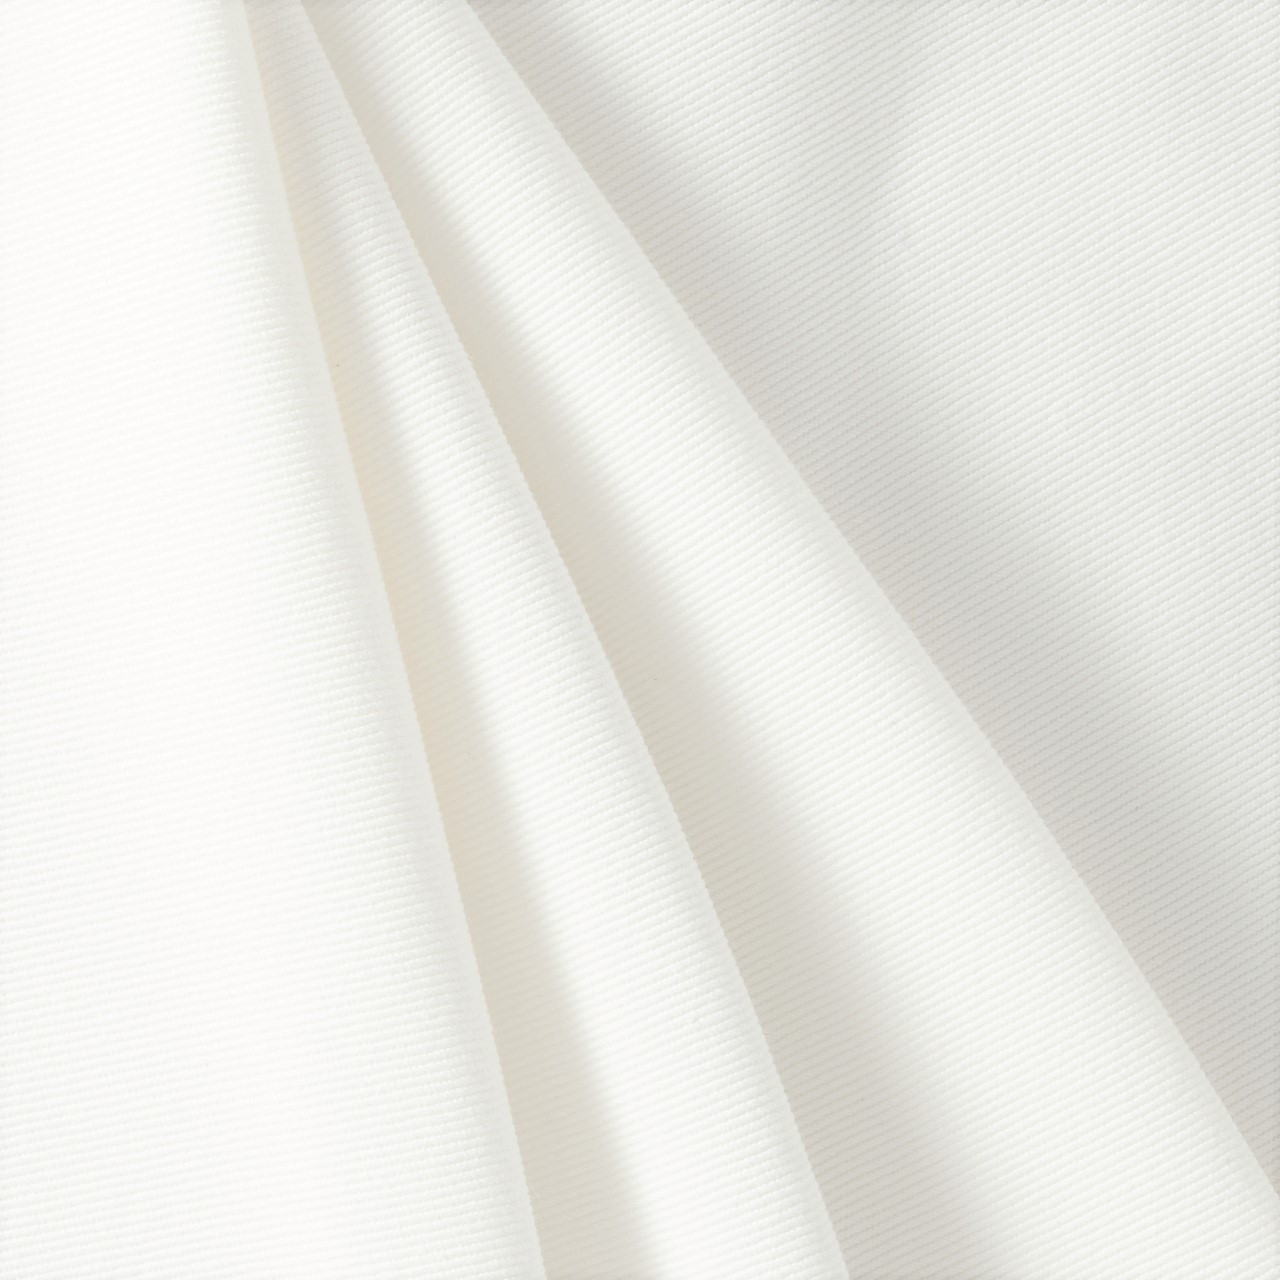 66 Plain Denium Fabric / White Denim Fabric, For Shirts & Kurti, Packaging  Type: Roll at Rs 150/meter in Mumbai